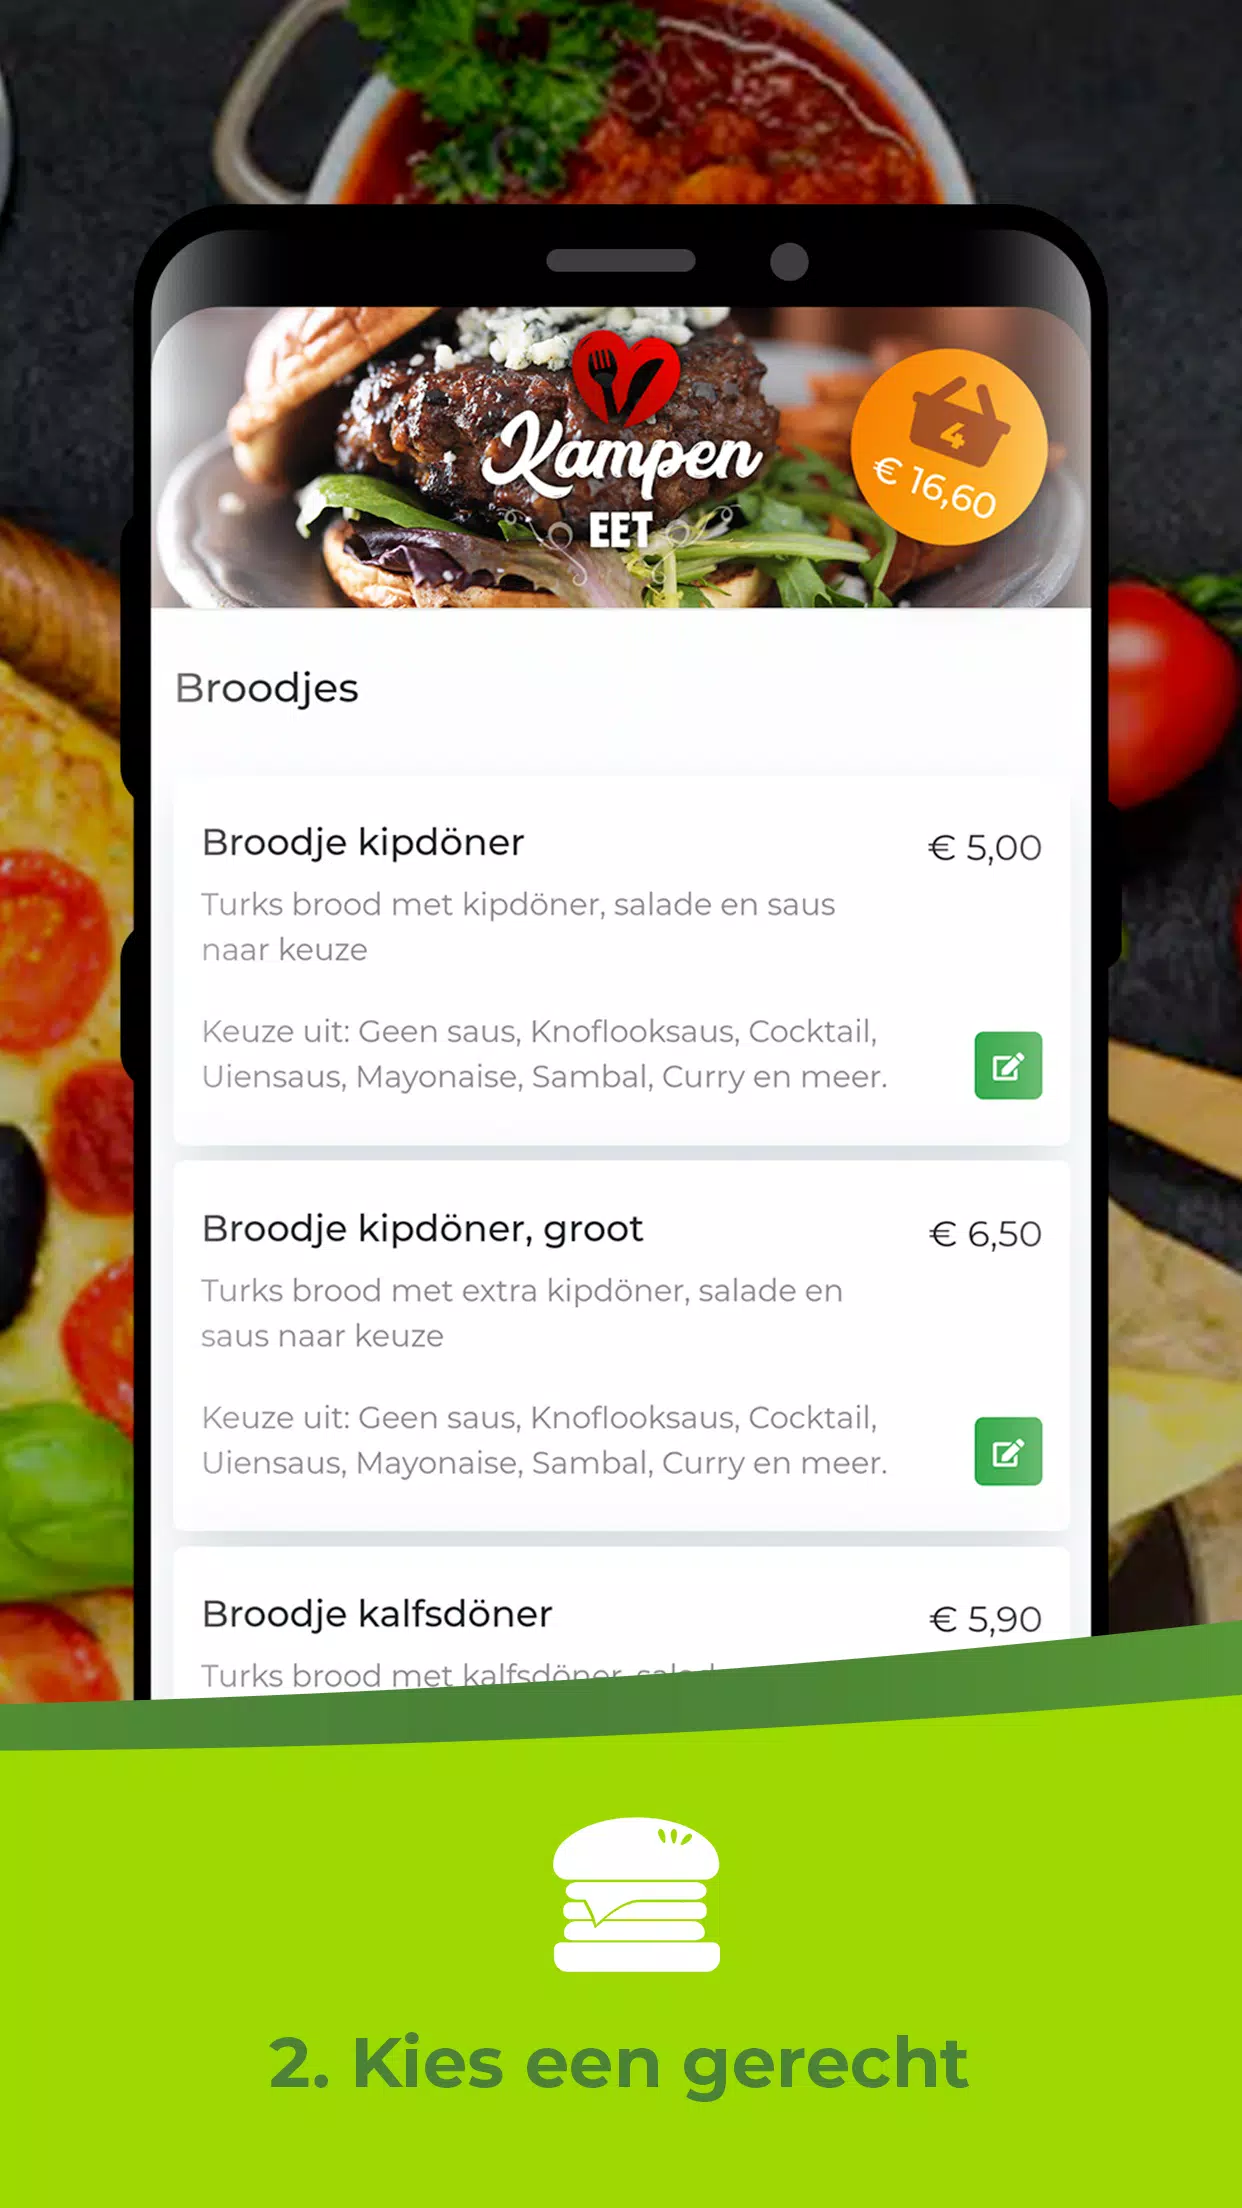 Kampen-eet.nl - Online eten bestellen in Kampen APK für Android  herunterladen